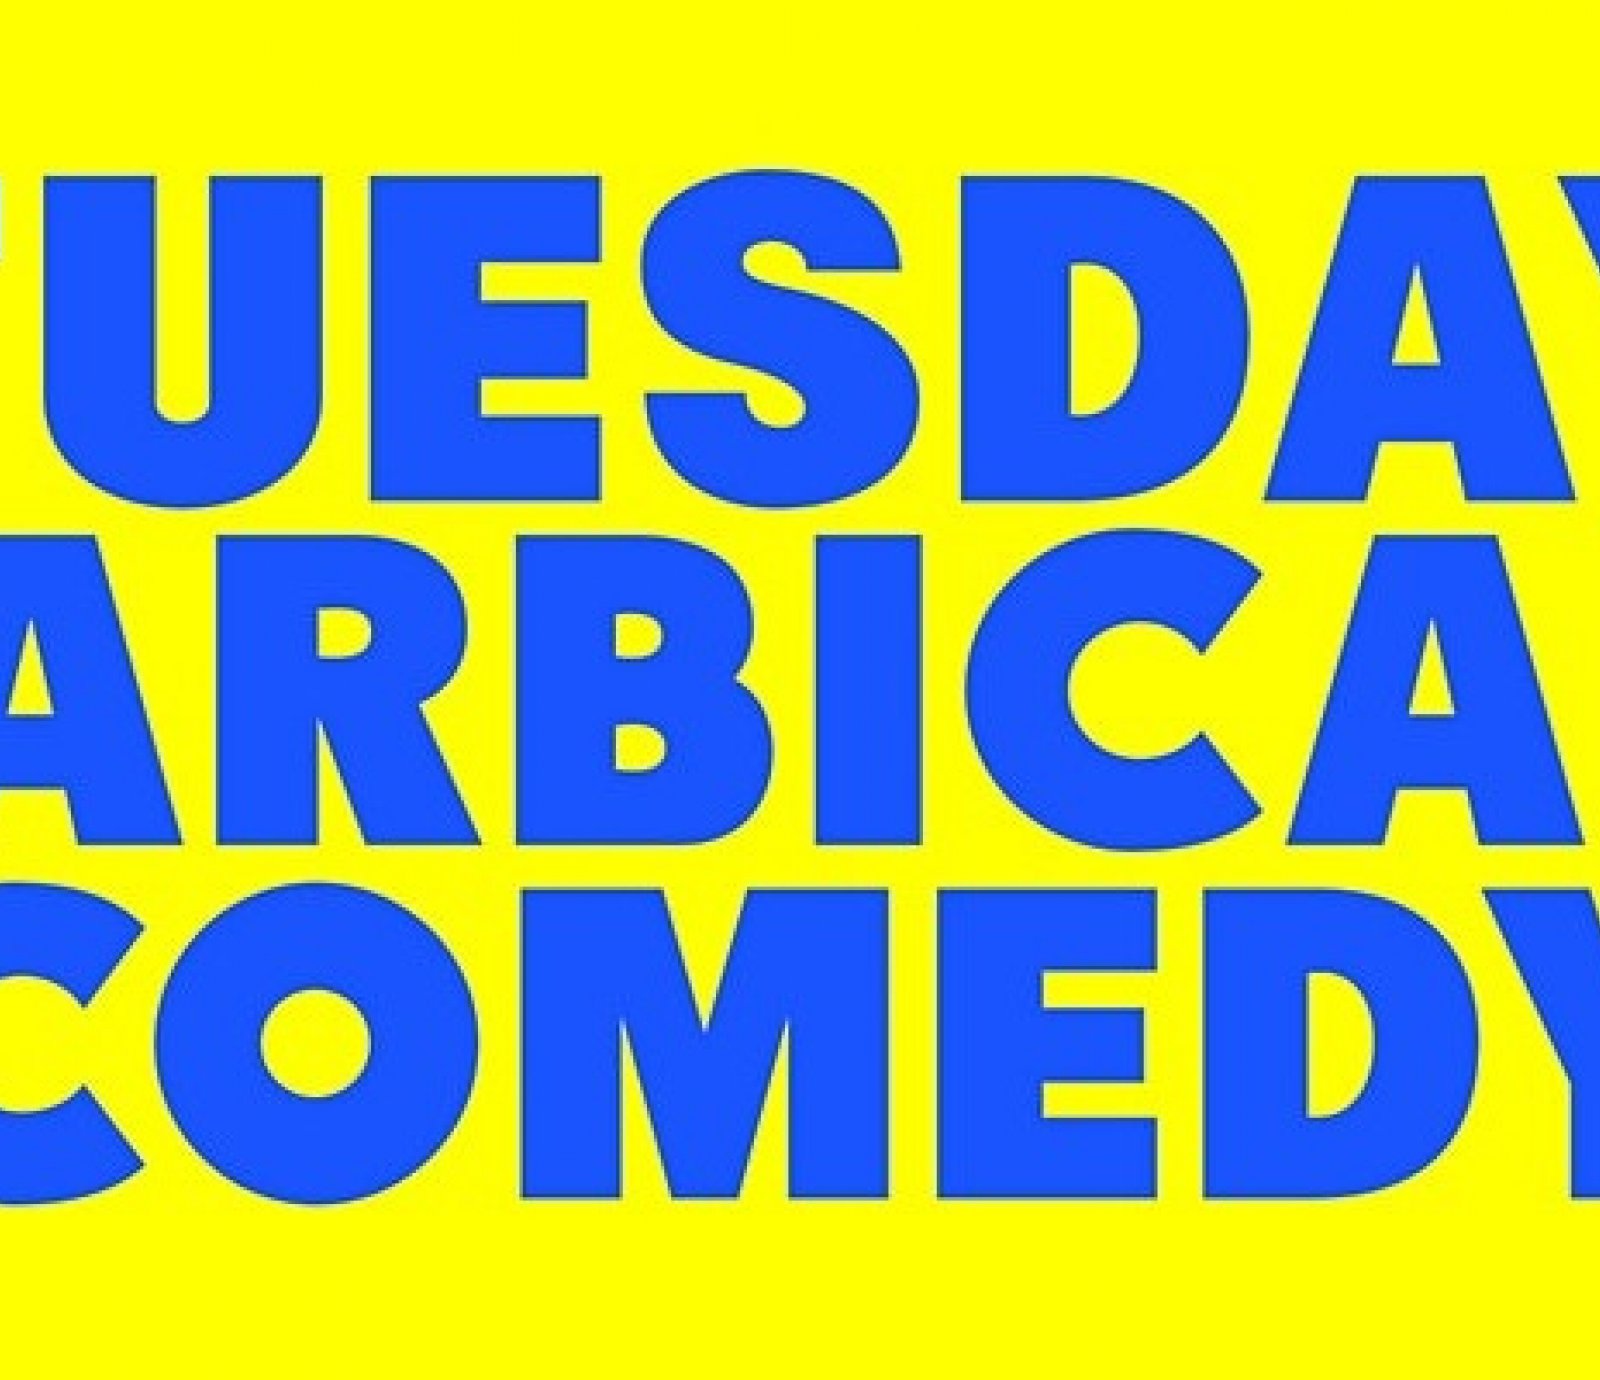 Tuesday Barbican Comedy